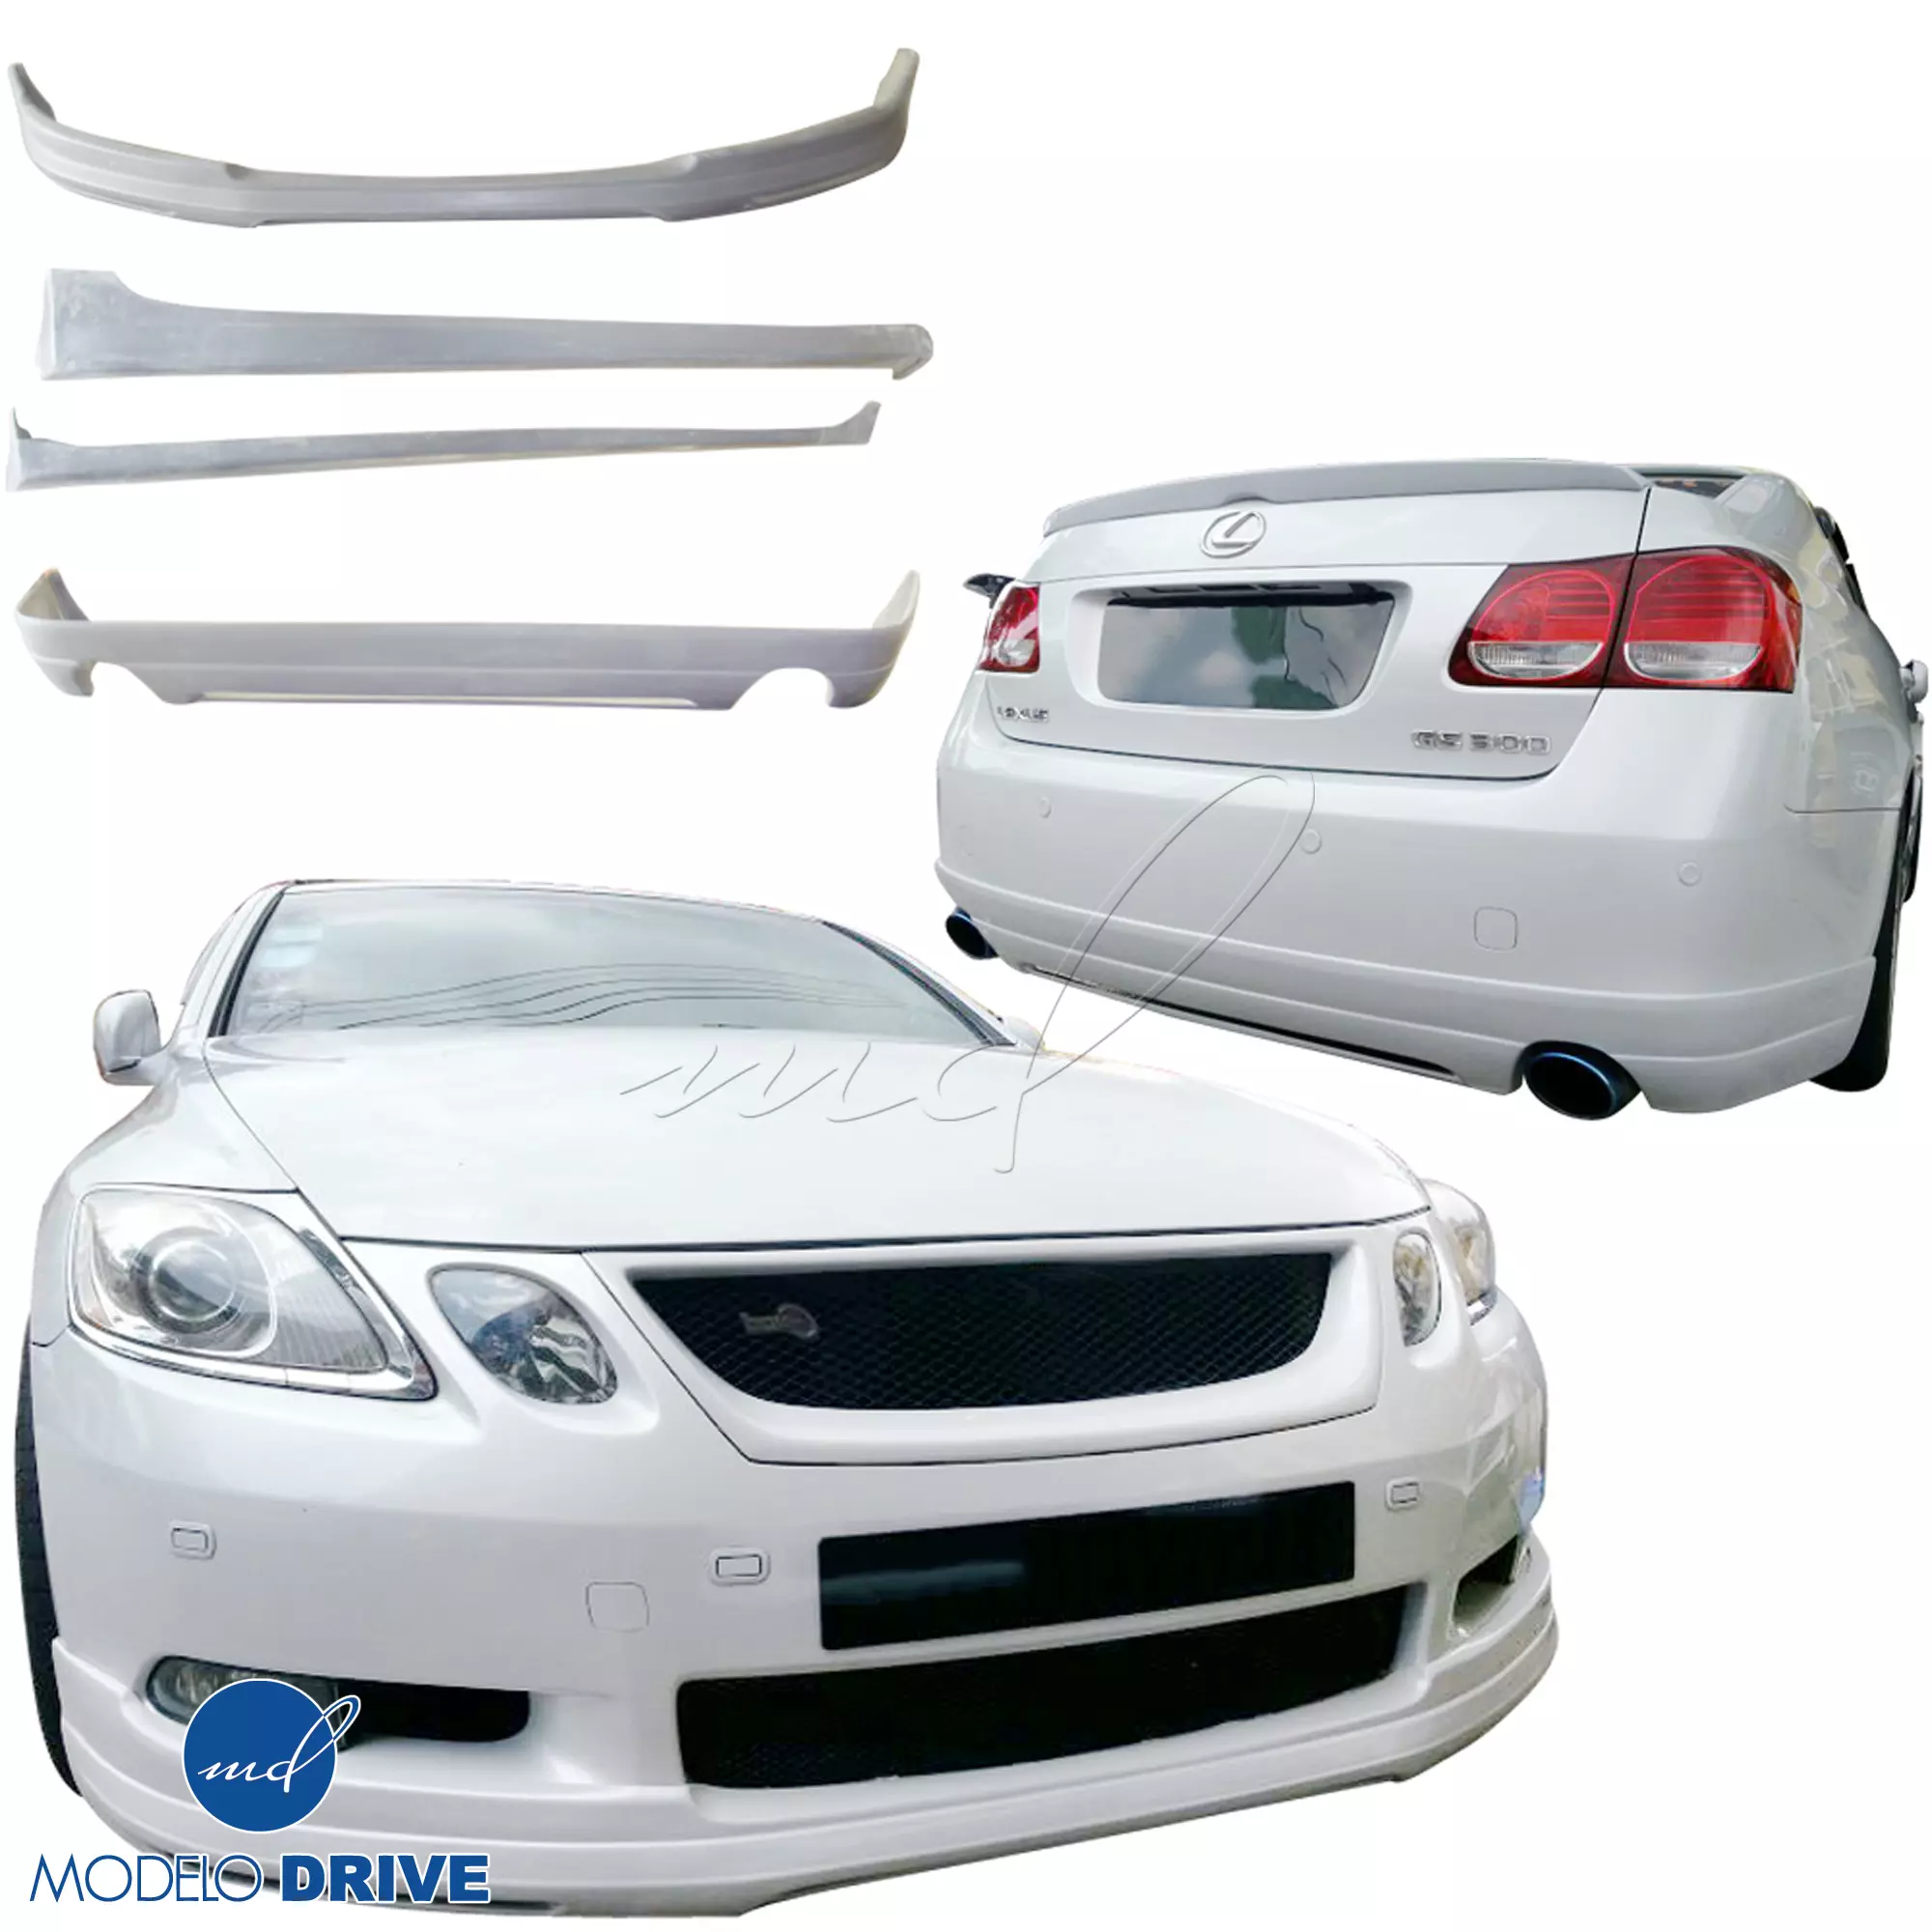 ModeloDrive FRP JPRO Body Kit 4pc > Lexus GS-Series GS300 GS350 GS430 GS450H 2006-2007 - Image 9